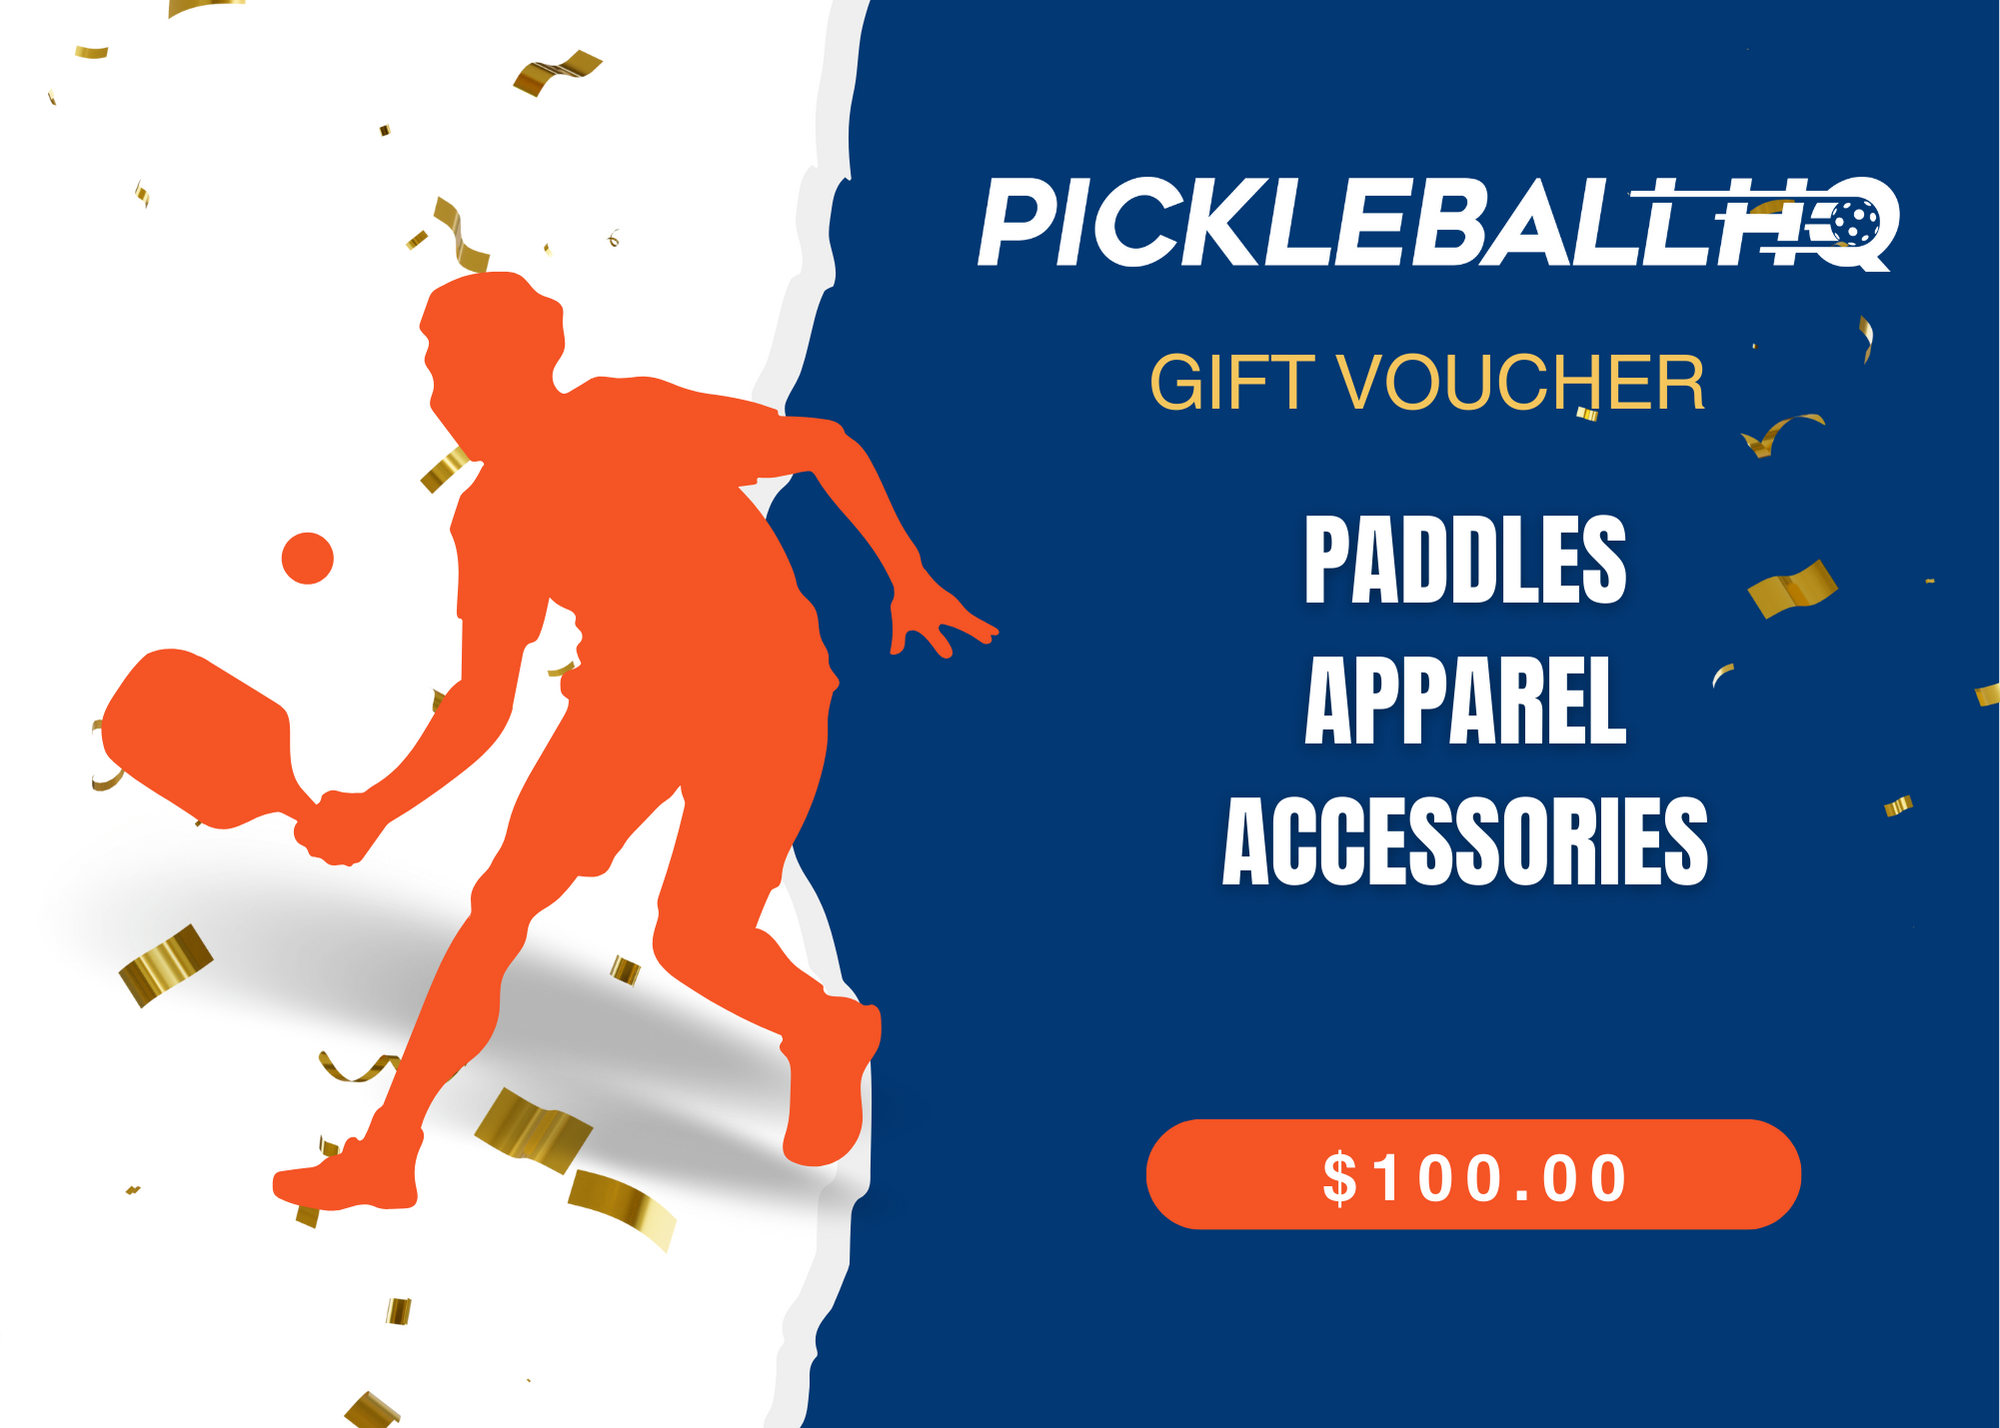 Pickleball HQ Gift Voucher $100